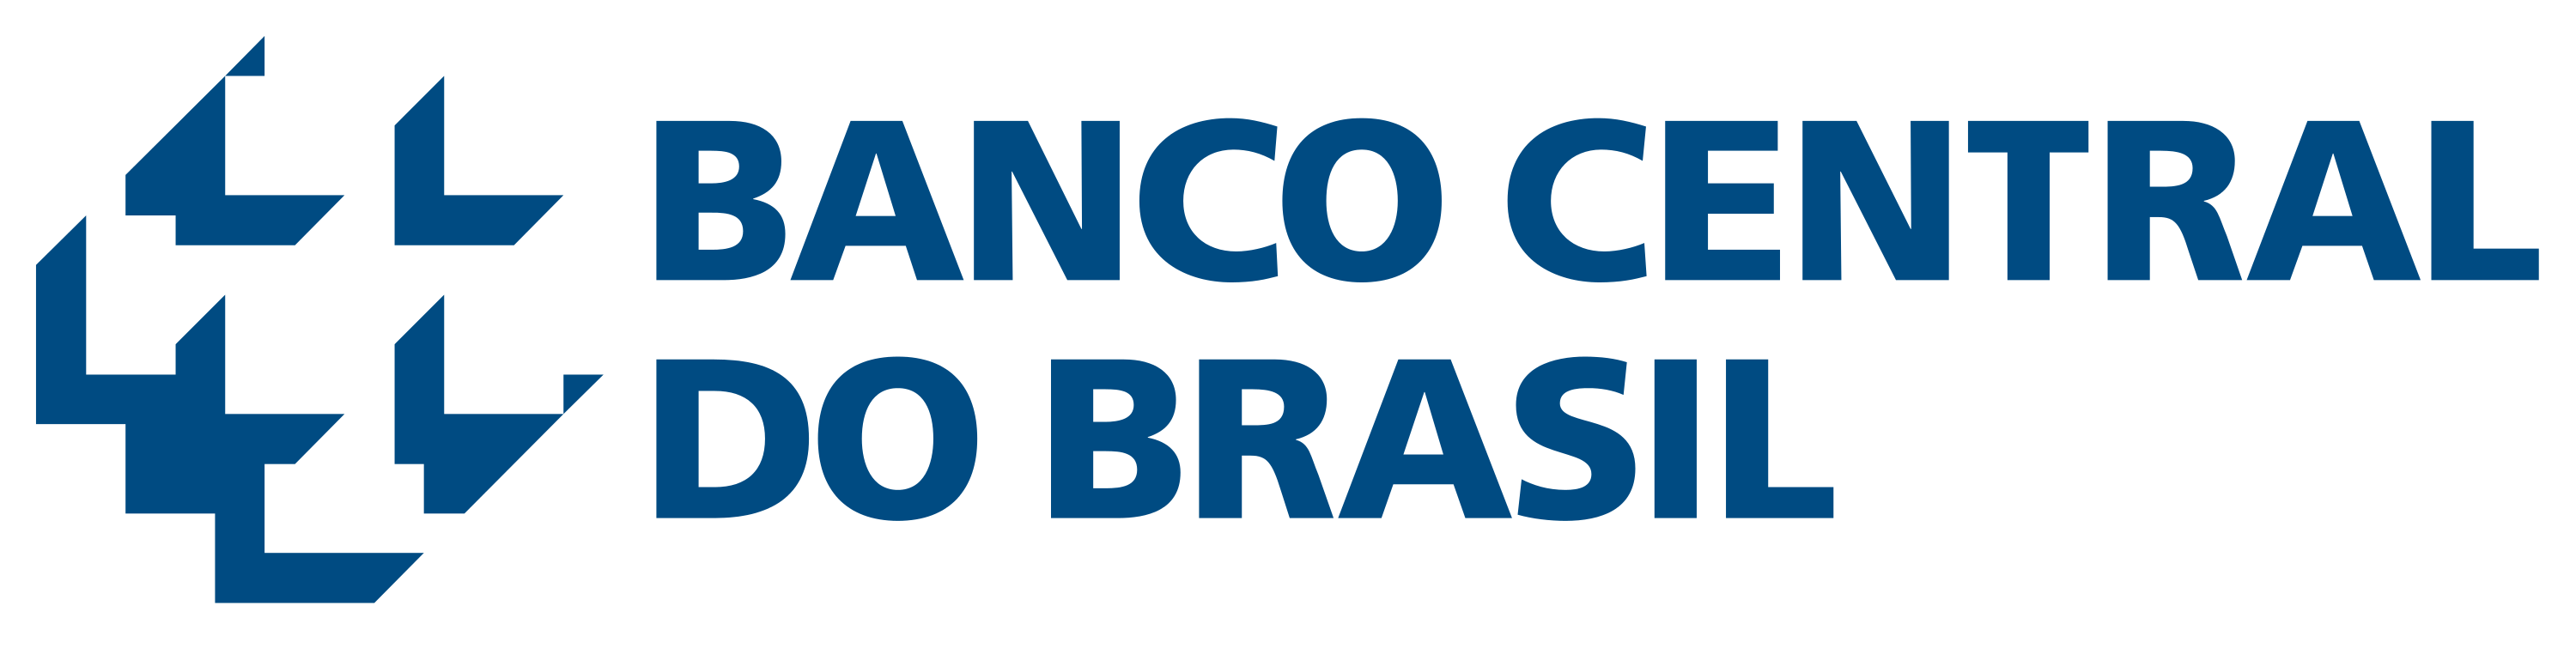 banco-central-do-brasil-logo-concurso-aprovado-concursoaprovado-com Melhores Concursos Públicos